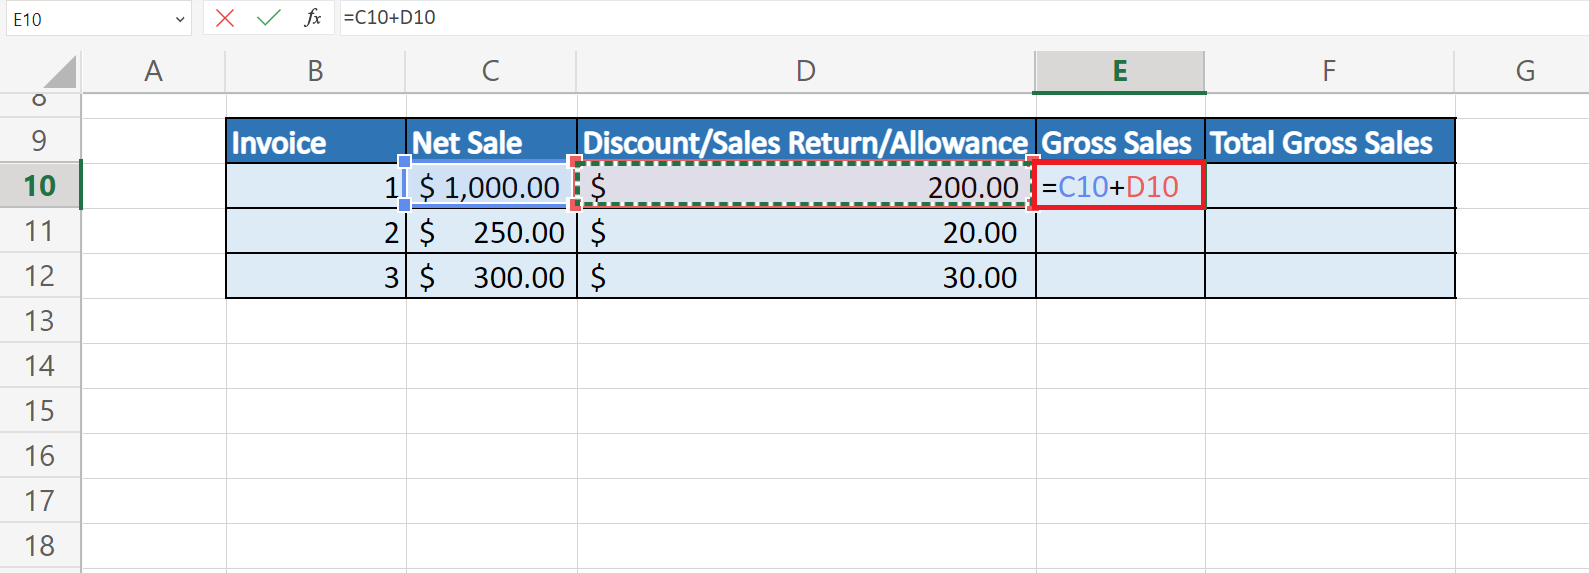 Gross Sales Formula in Excel